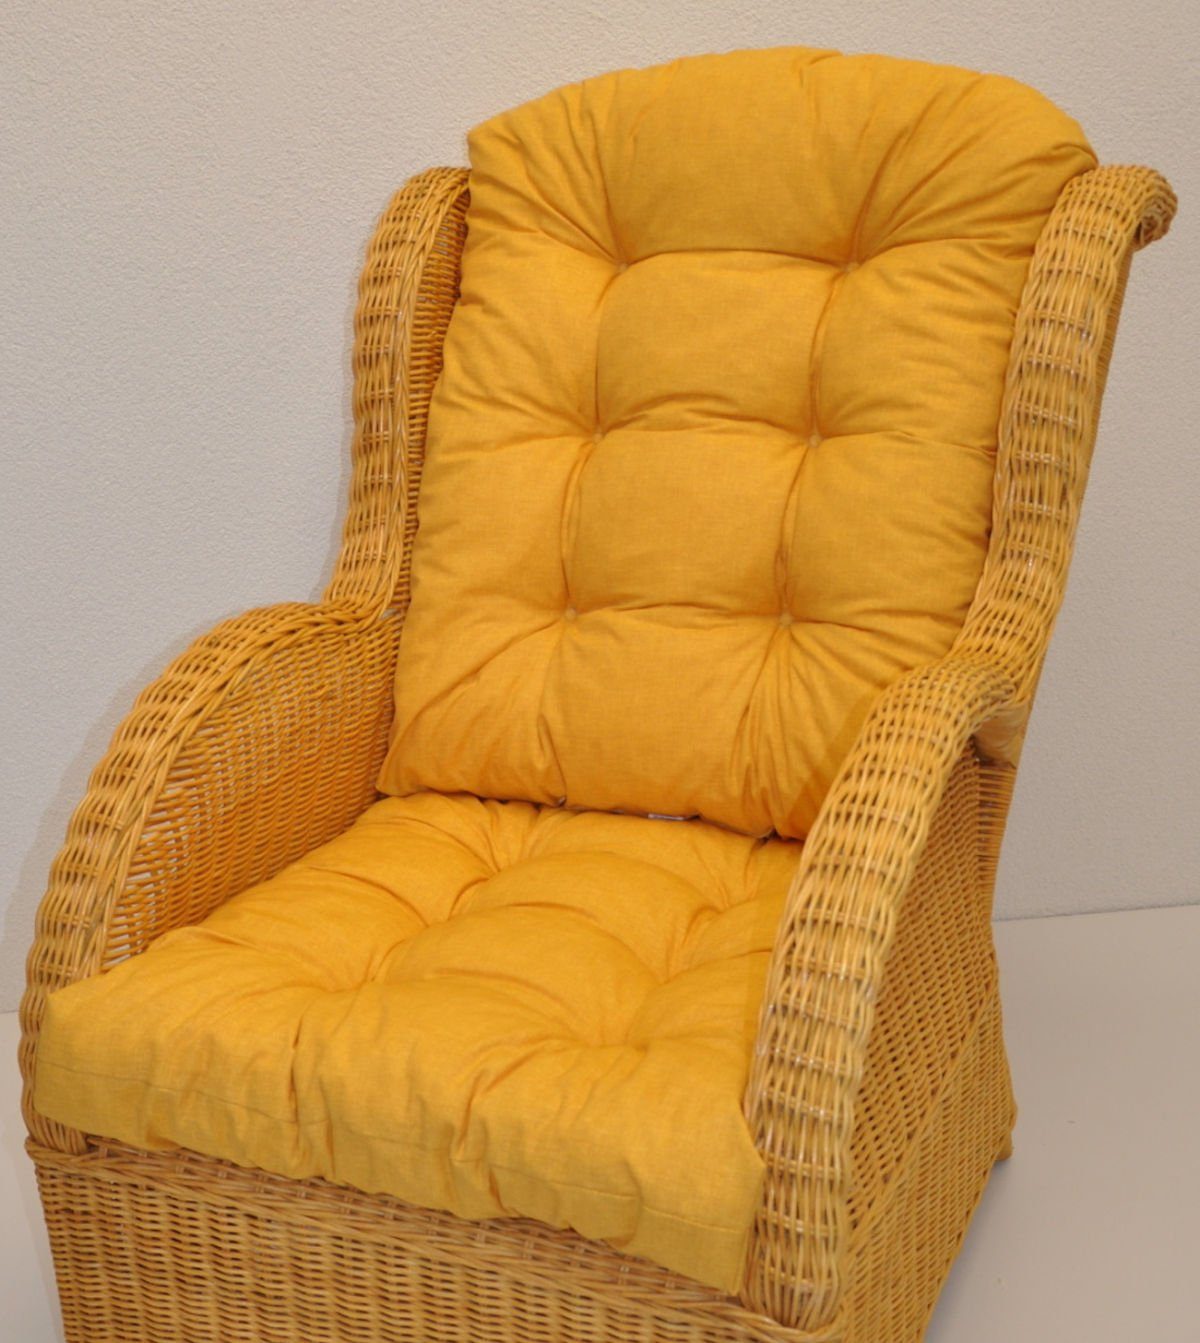 Rattani Sesselauflage Polster Kissen für Rattan Ohrensessel Rattansessel, Color gelb